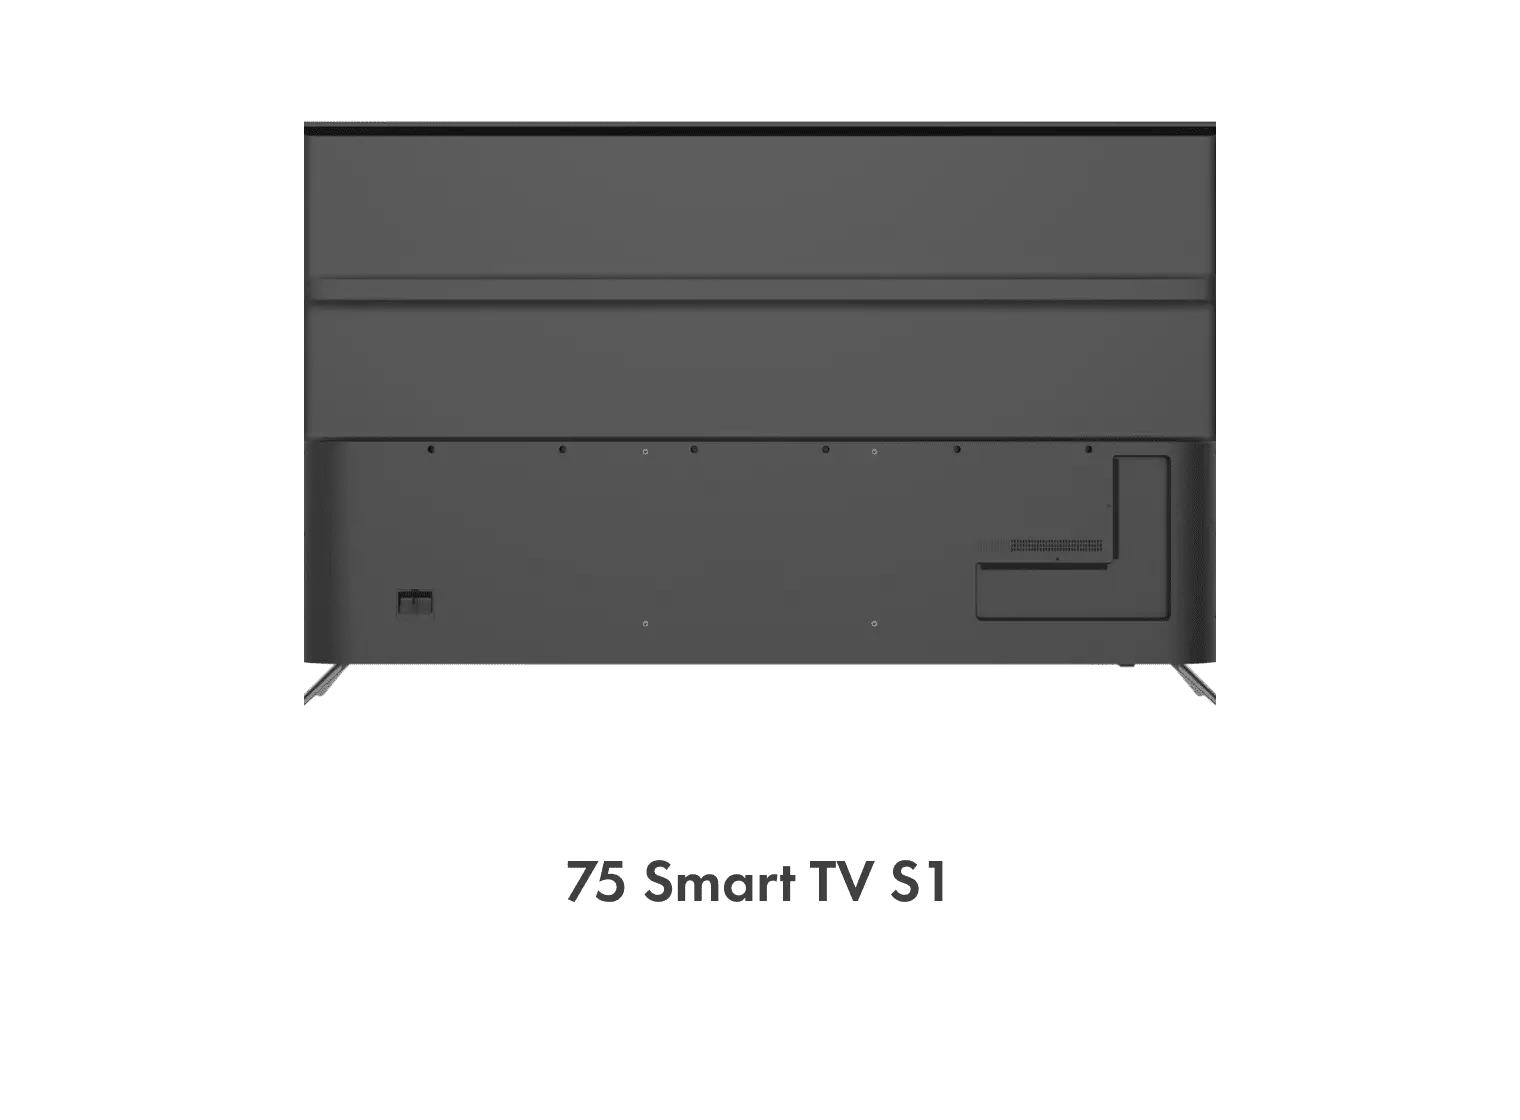 Телевизор Haier 75 Smart TV S1